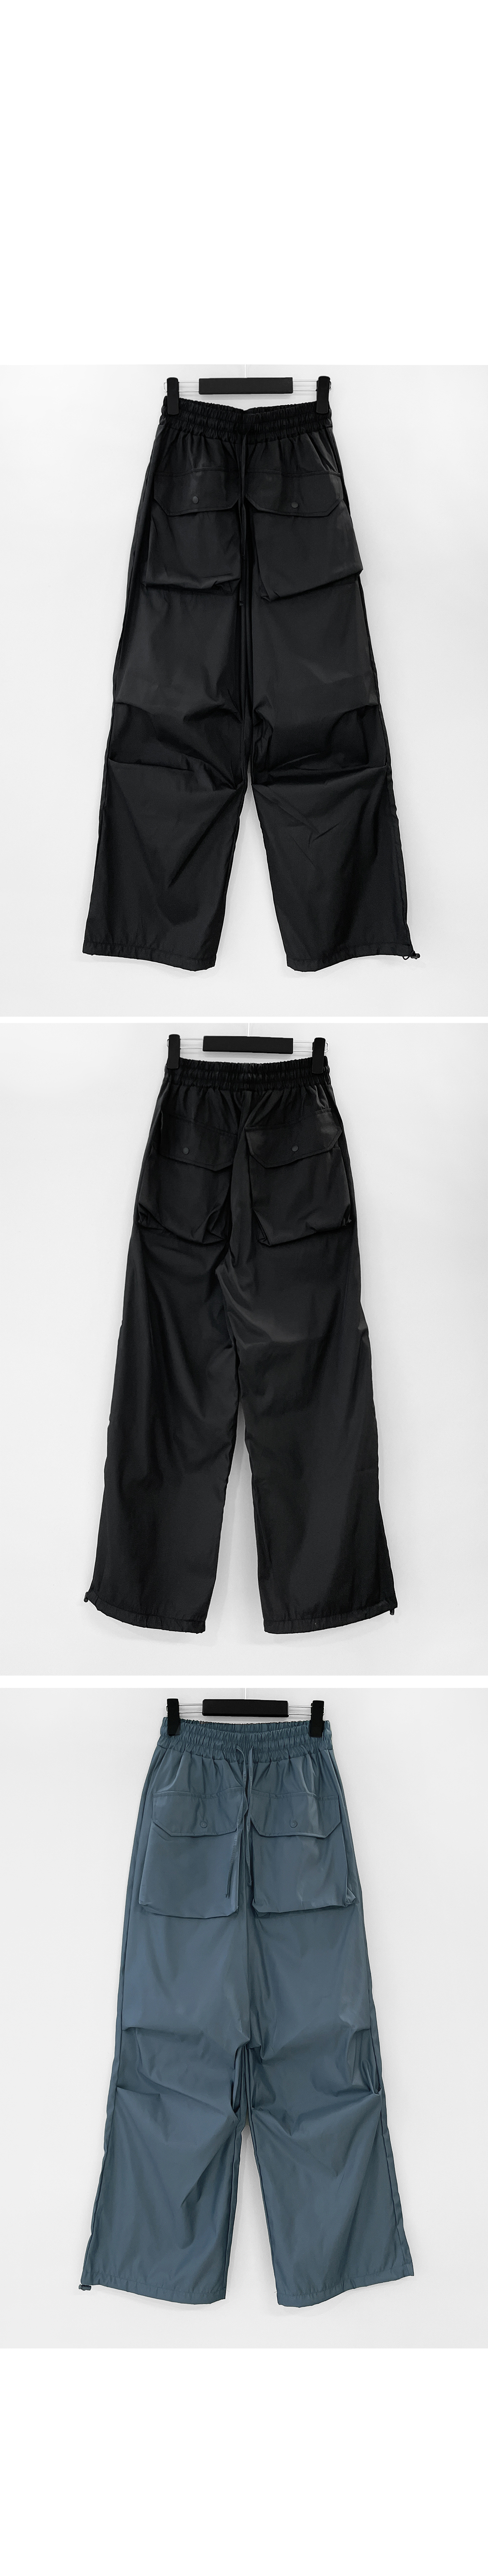 suspenders skirt/pants charcoal color image-S1L9